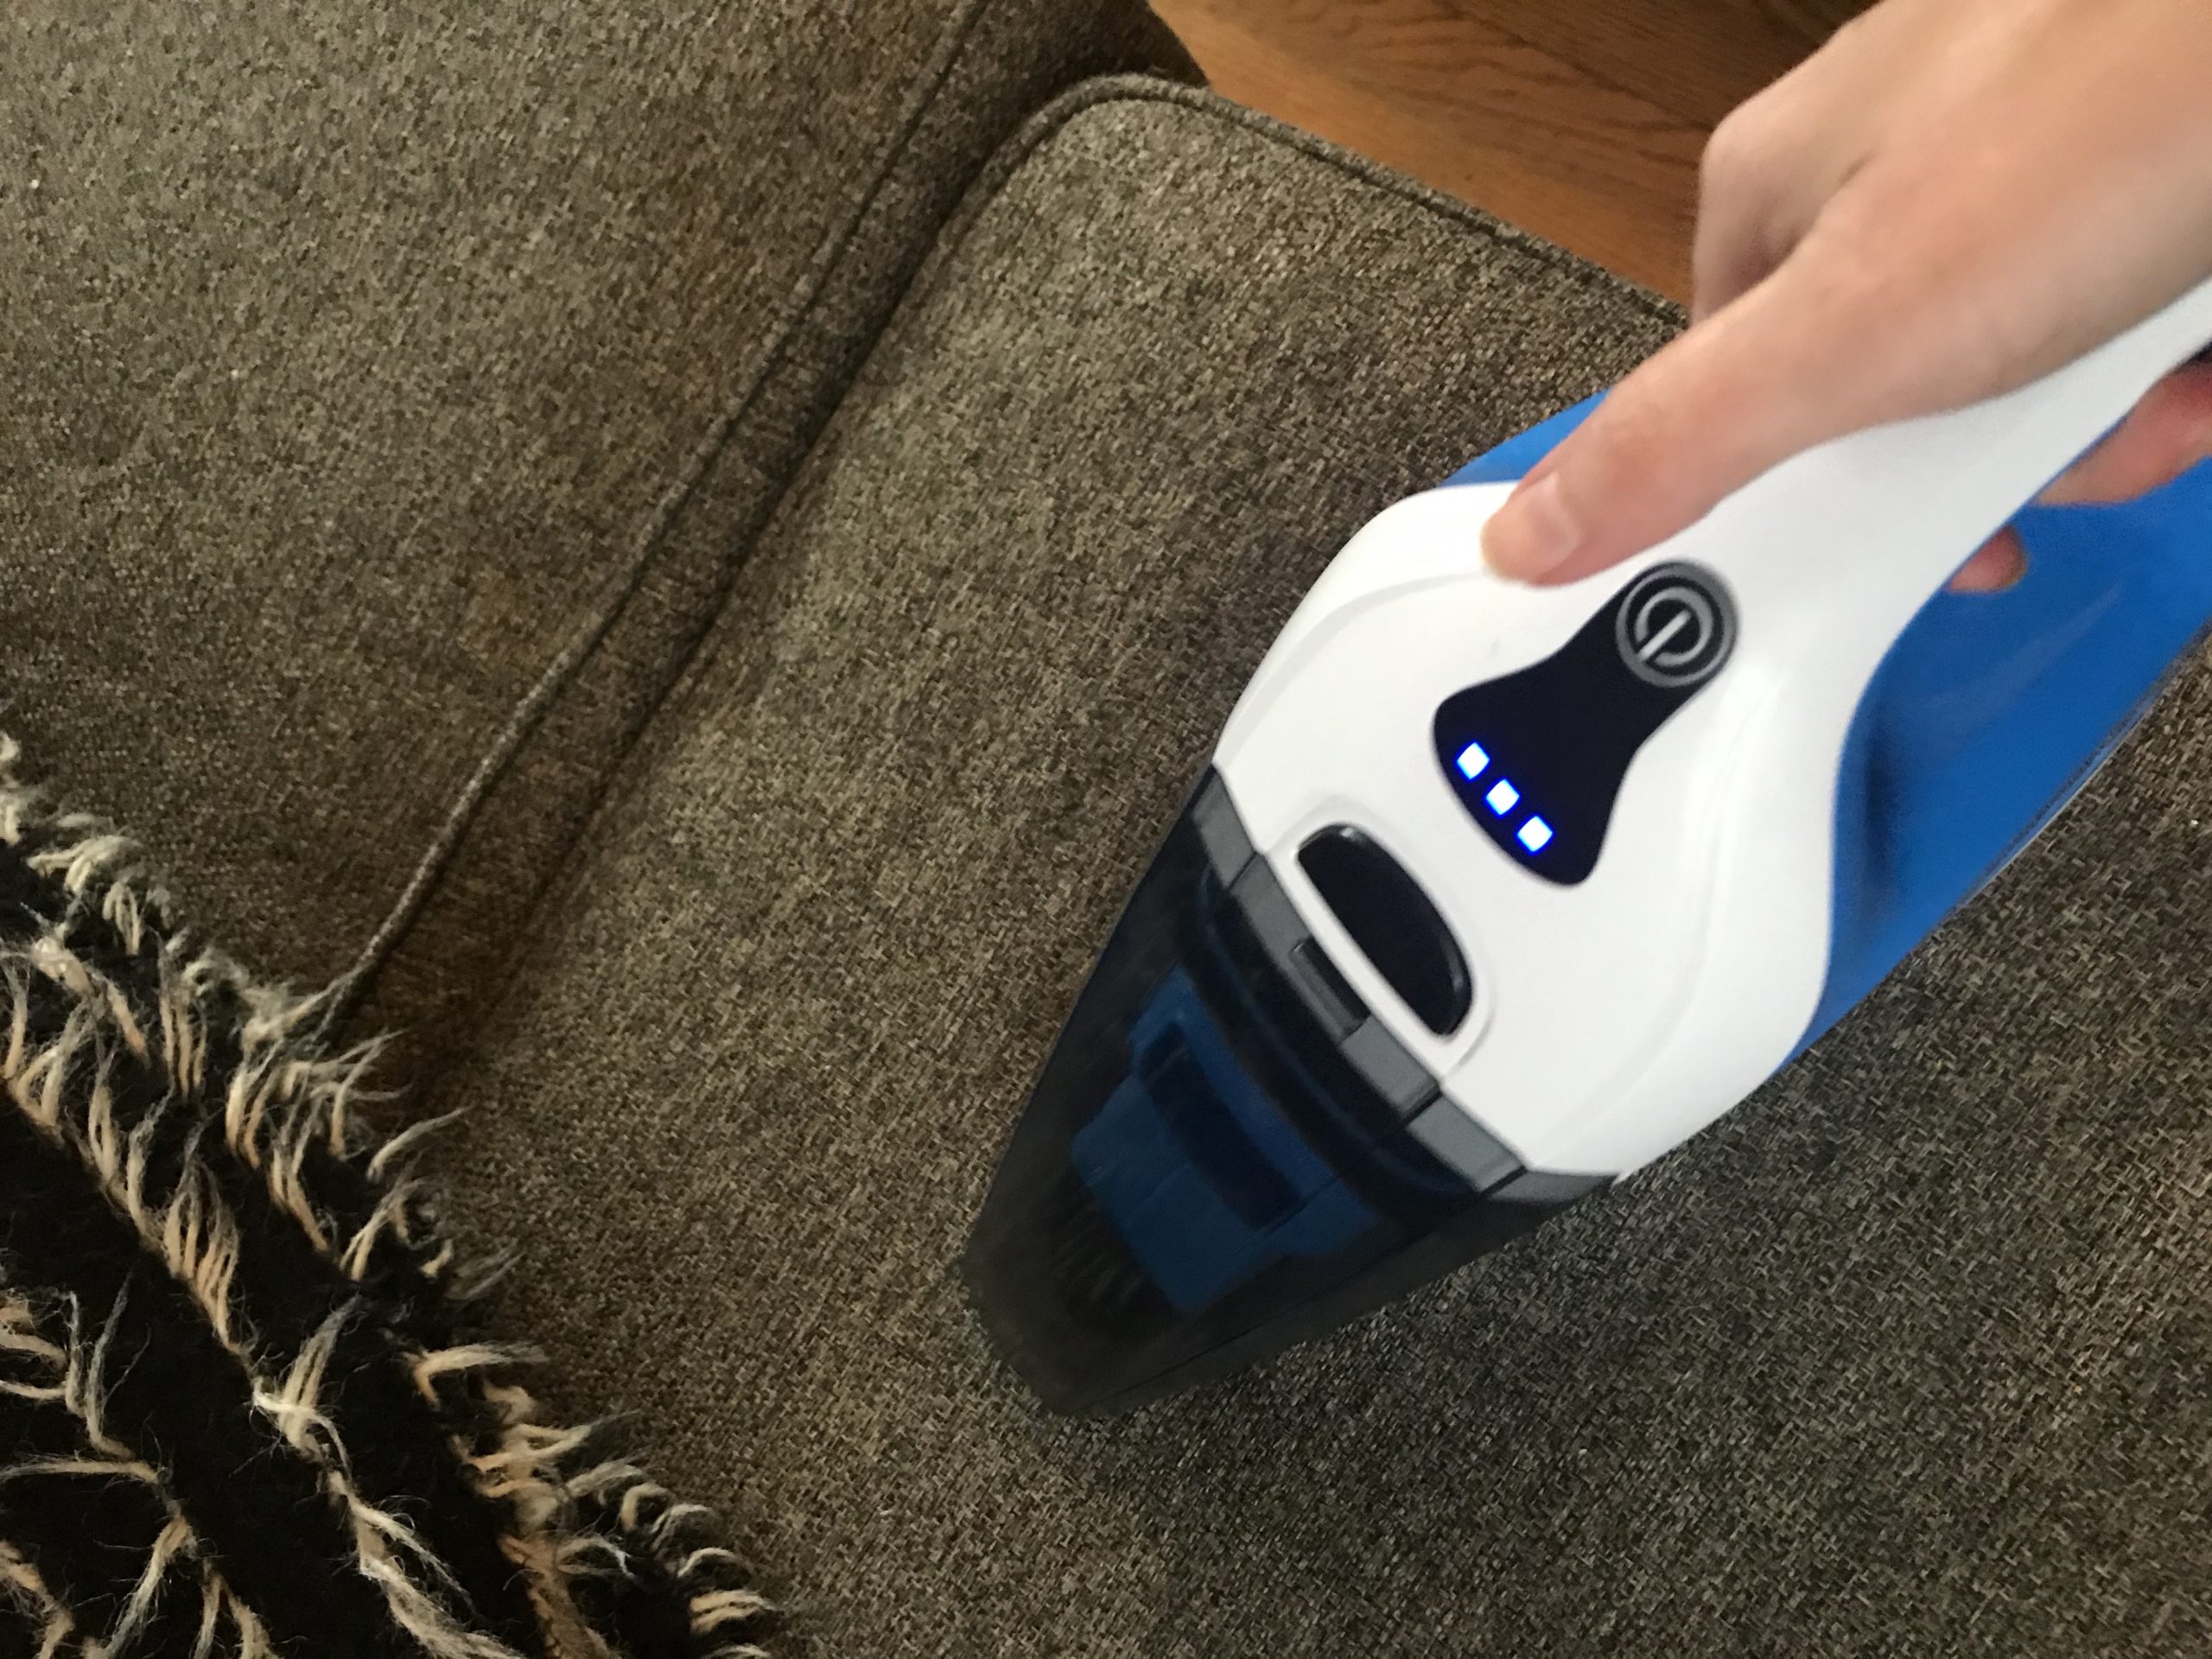 Aposen Handheld Vacuum Cleaner Review